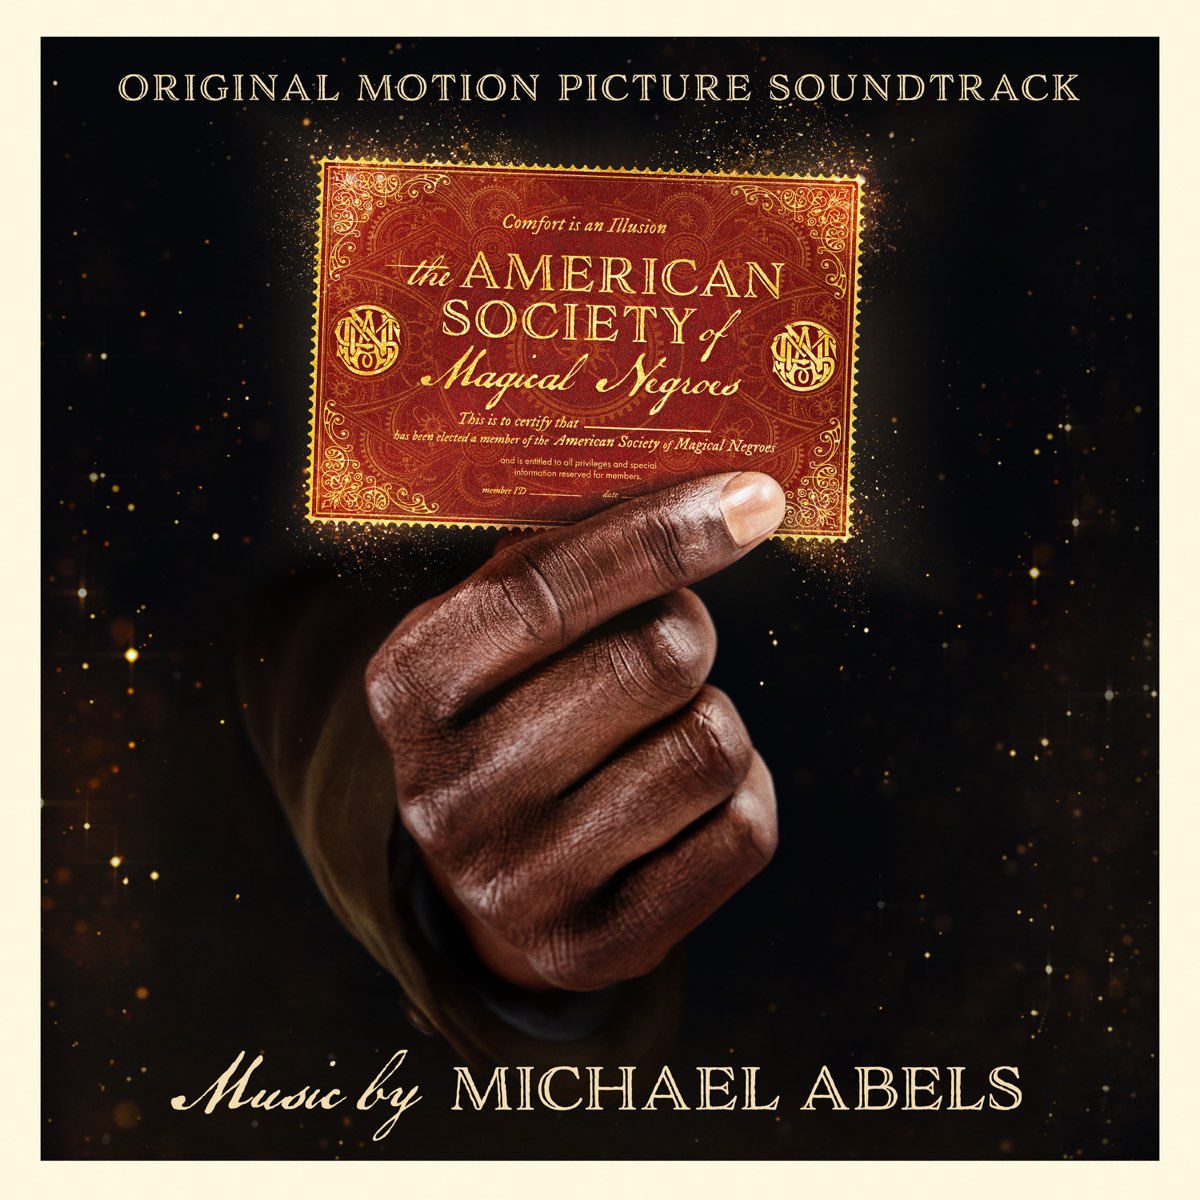 Detalles de la banda sonora 'The American Society of Magical Negroes' (2024) con música de Michael Abels.
➡️ asturscore.com/noticias/back-…
#newsAsturScore #BandaSonora #BSO #TheAmericanSocietyOfMagicalNegroes @asmnmovie @michaelabels @BackLotMusic